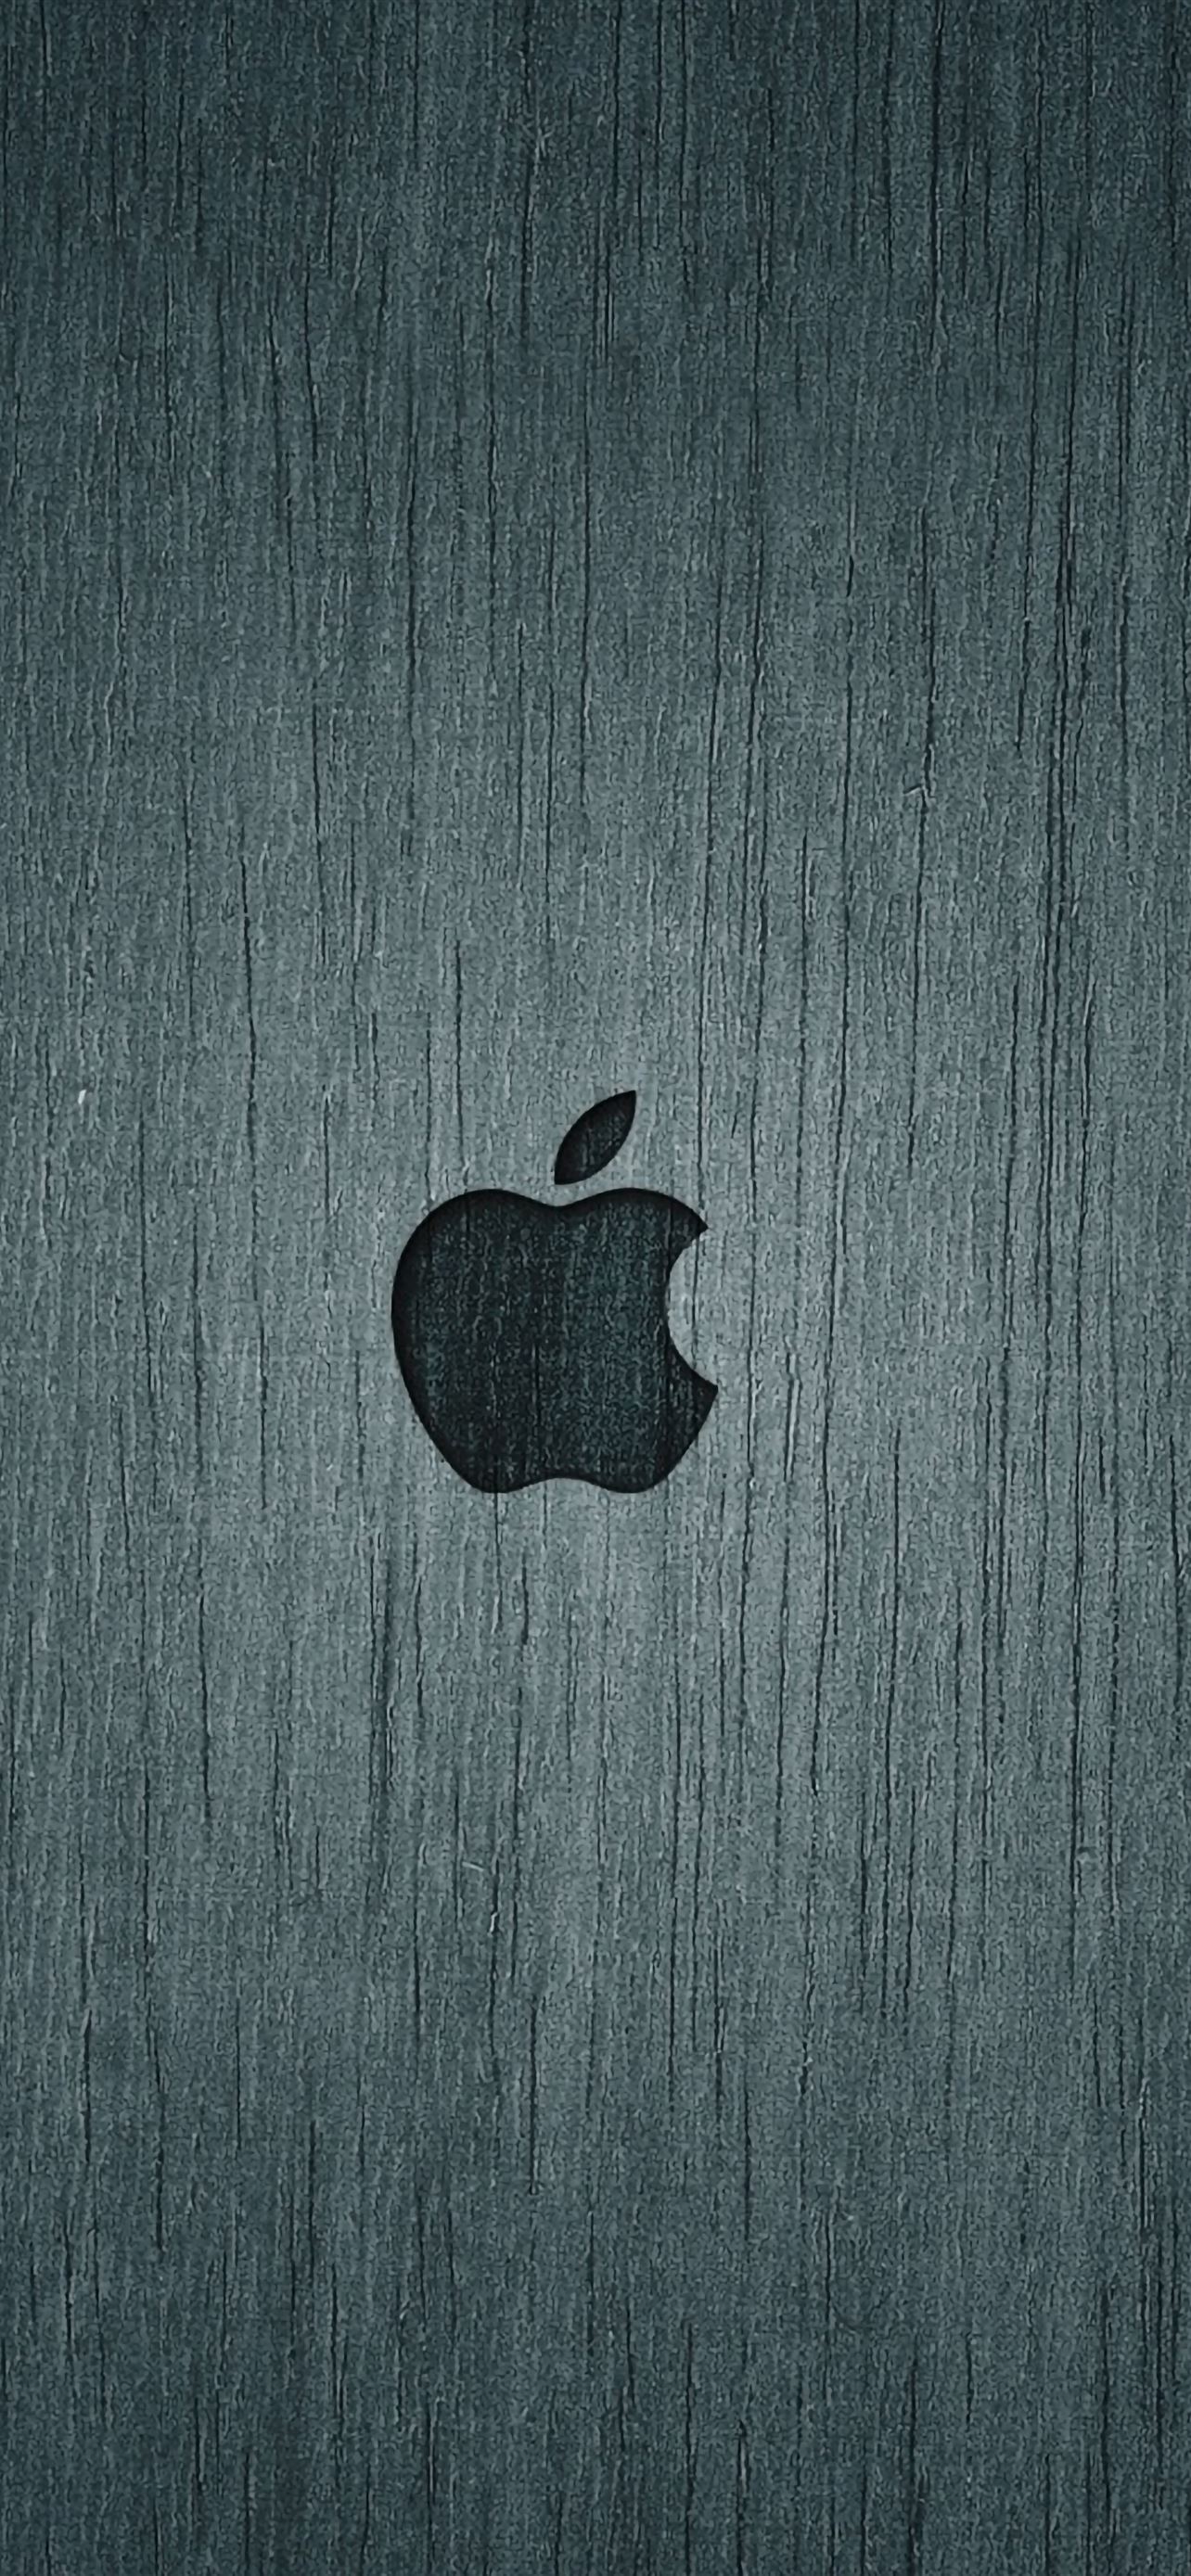 Dark Apple Wood Iphone Wallpapers Free Download